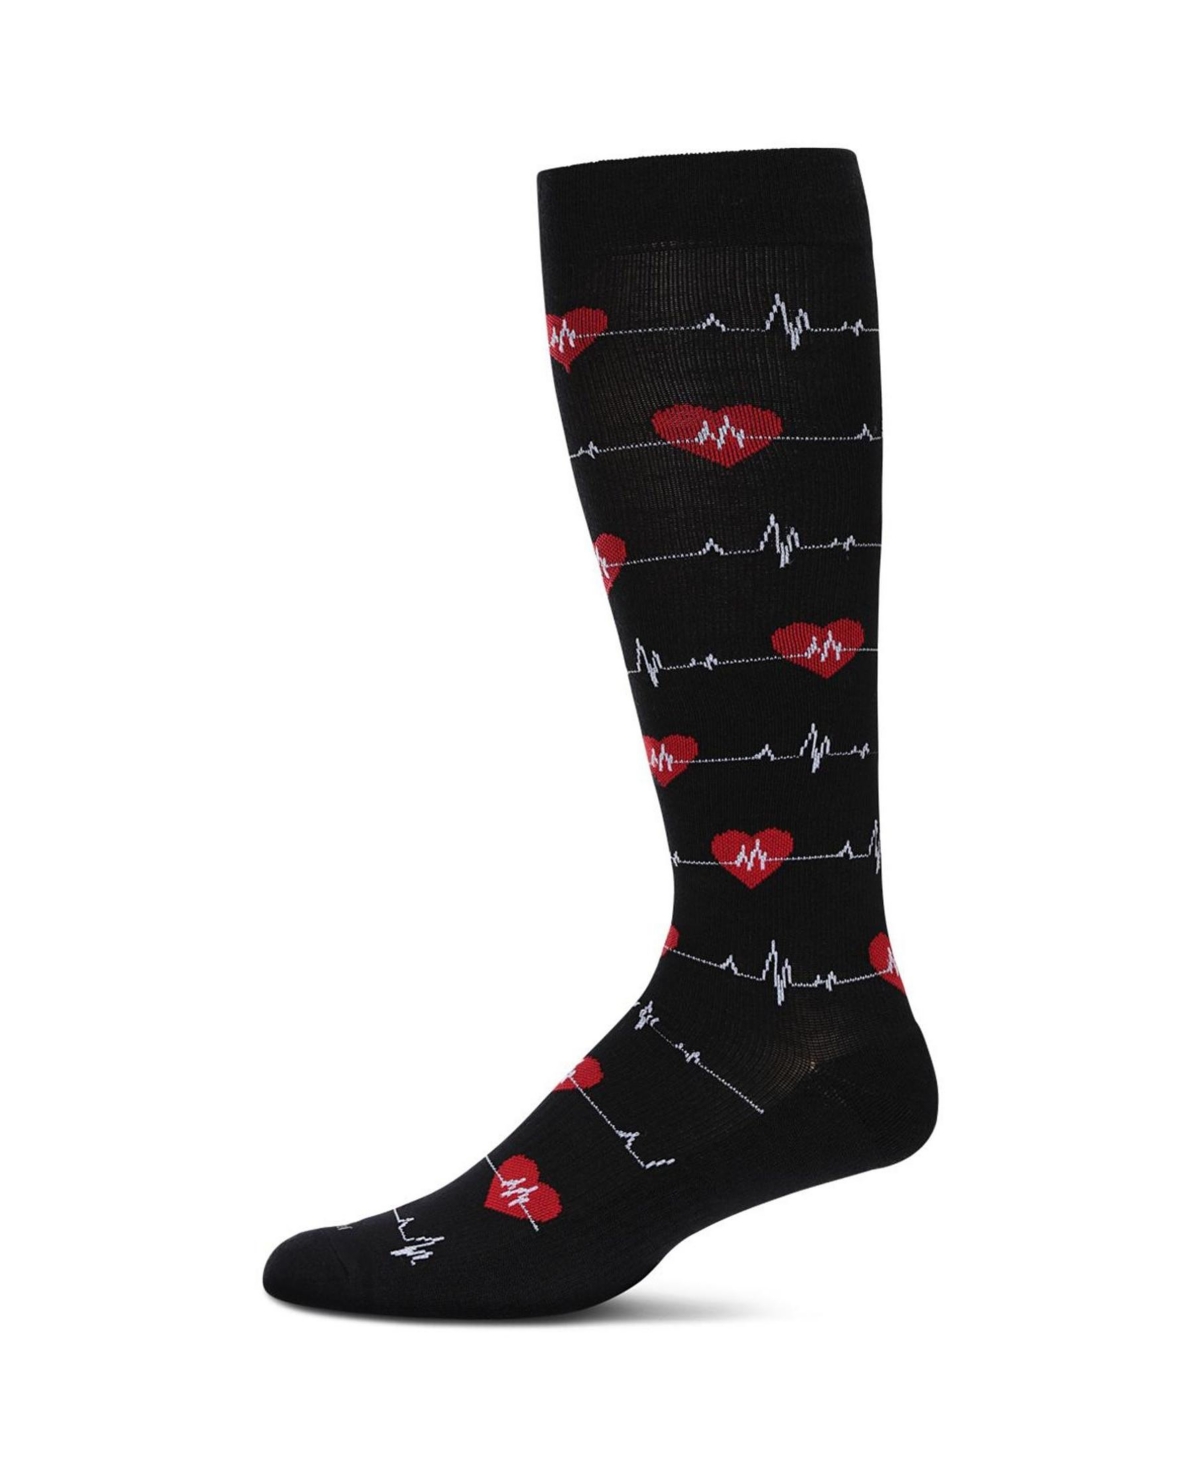 Men's Medical 8-15 mmHg Graduated Compression Socks - Black